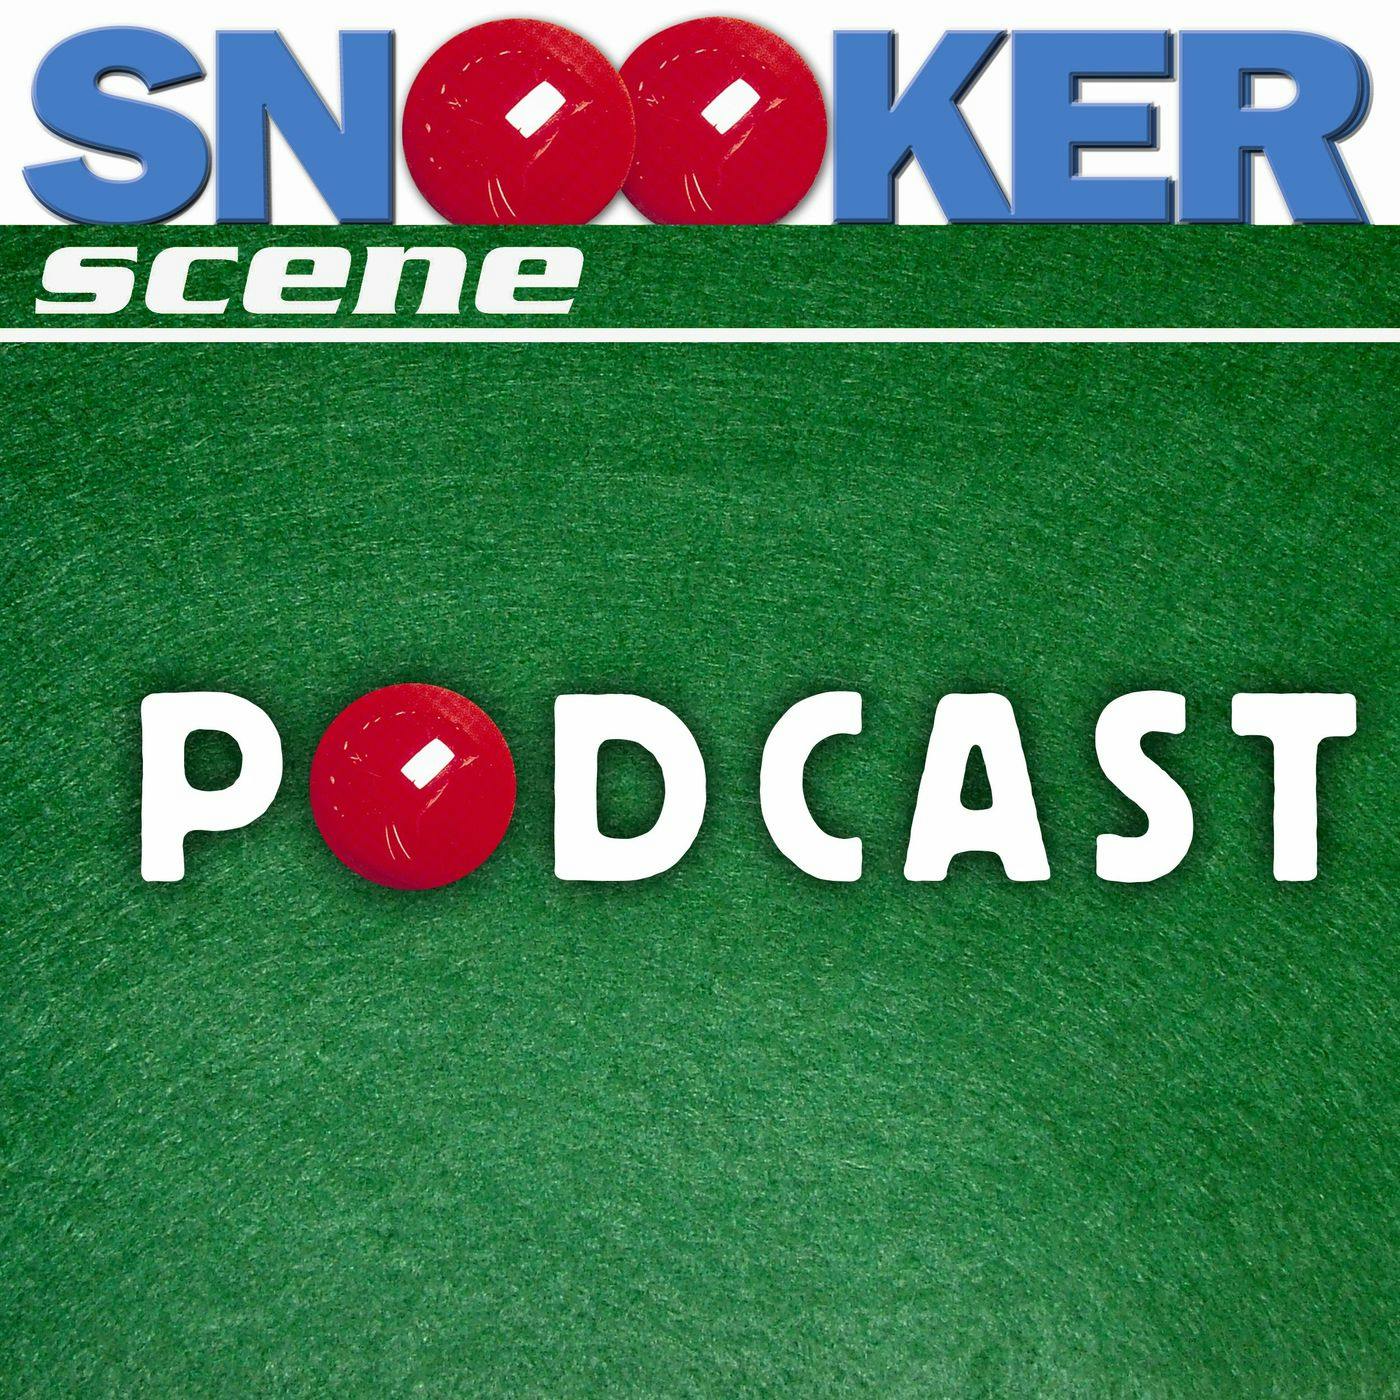 Snooker Scene Podcast episode 170 - From the Archives, Mark Allen